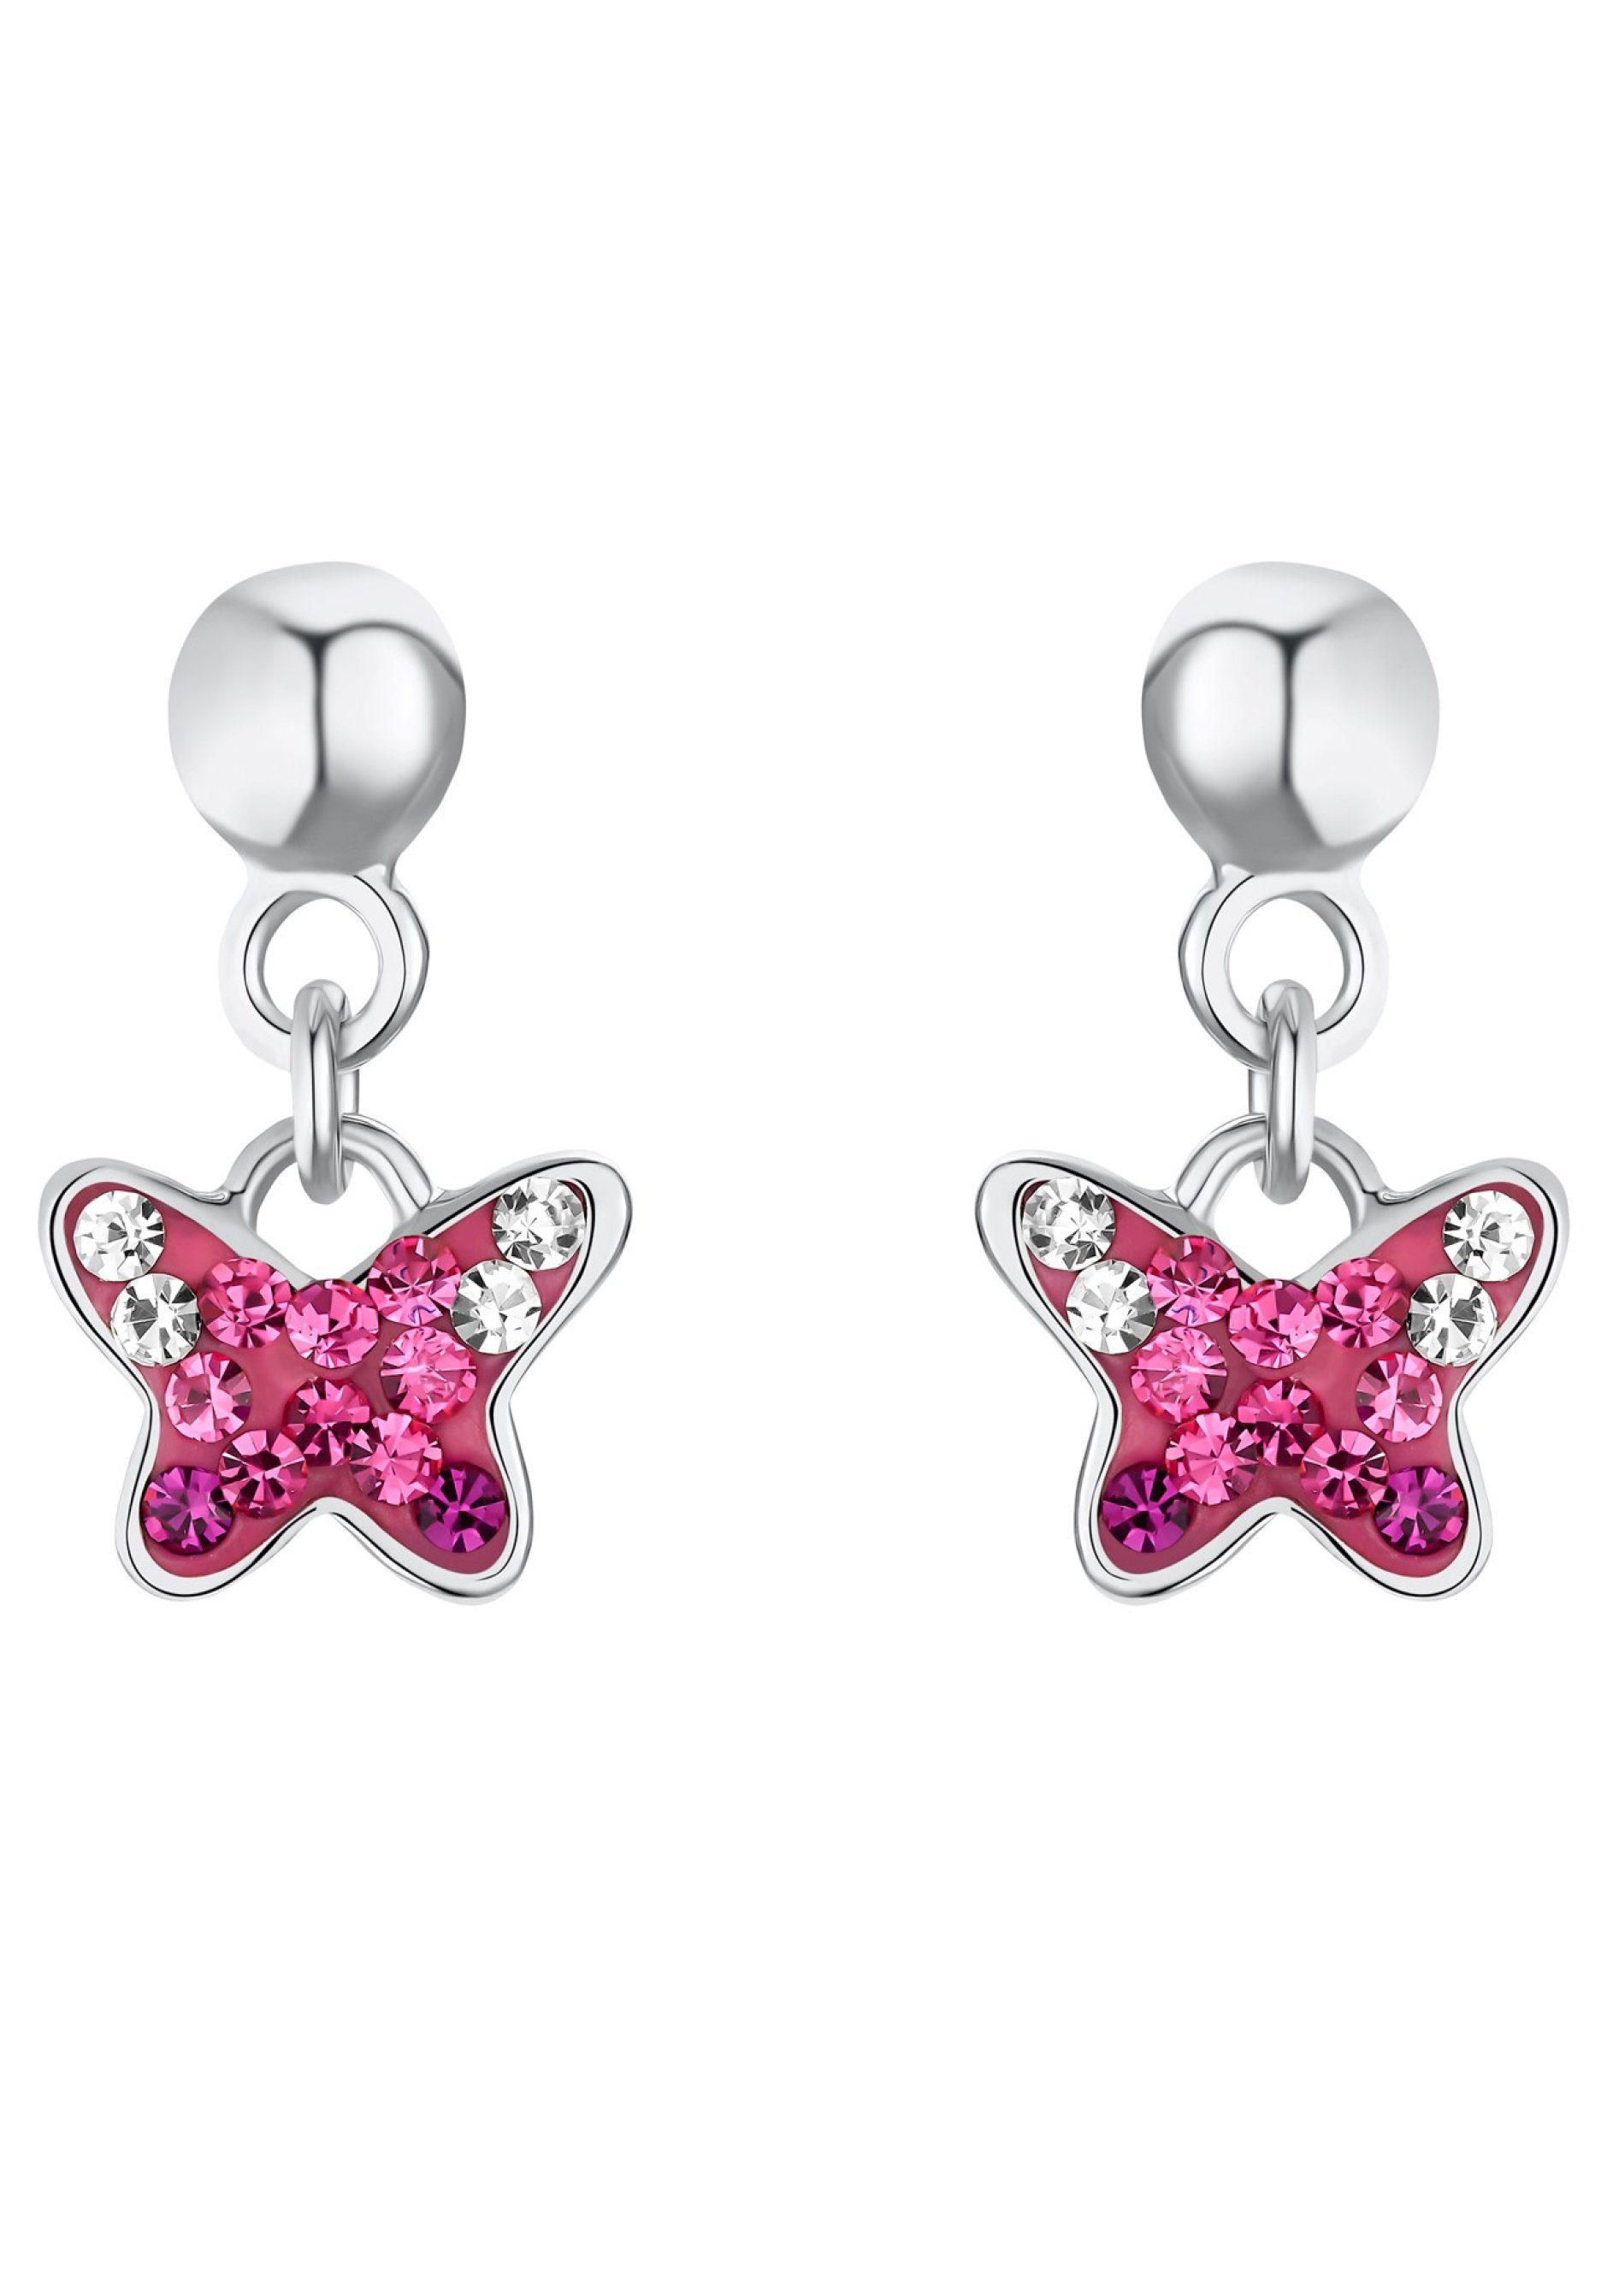 Paar Lillifee Preciosa Crystal mit Schmetterling, 2033997, Prinzessin Ohrhänger